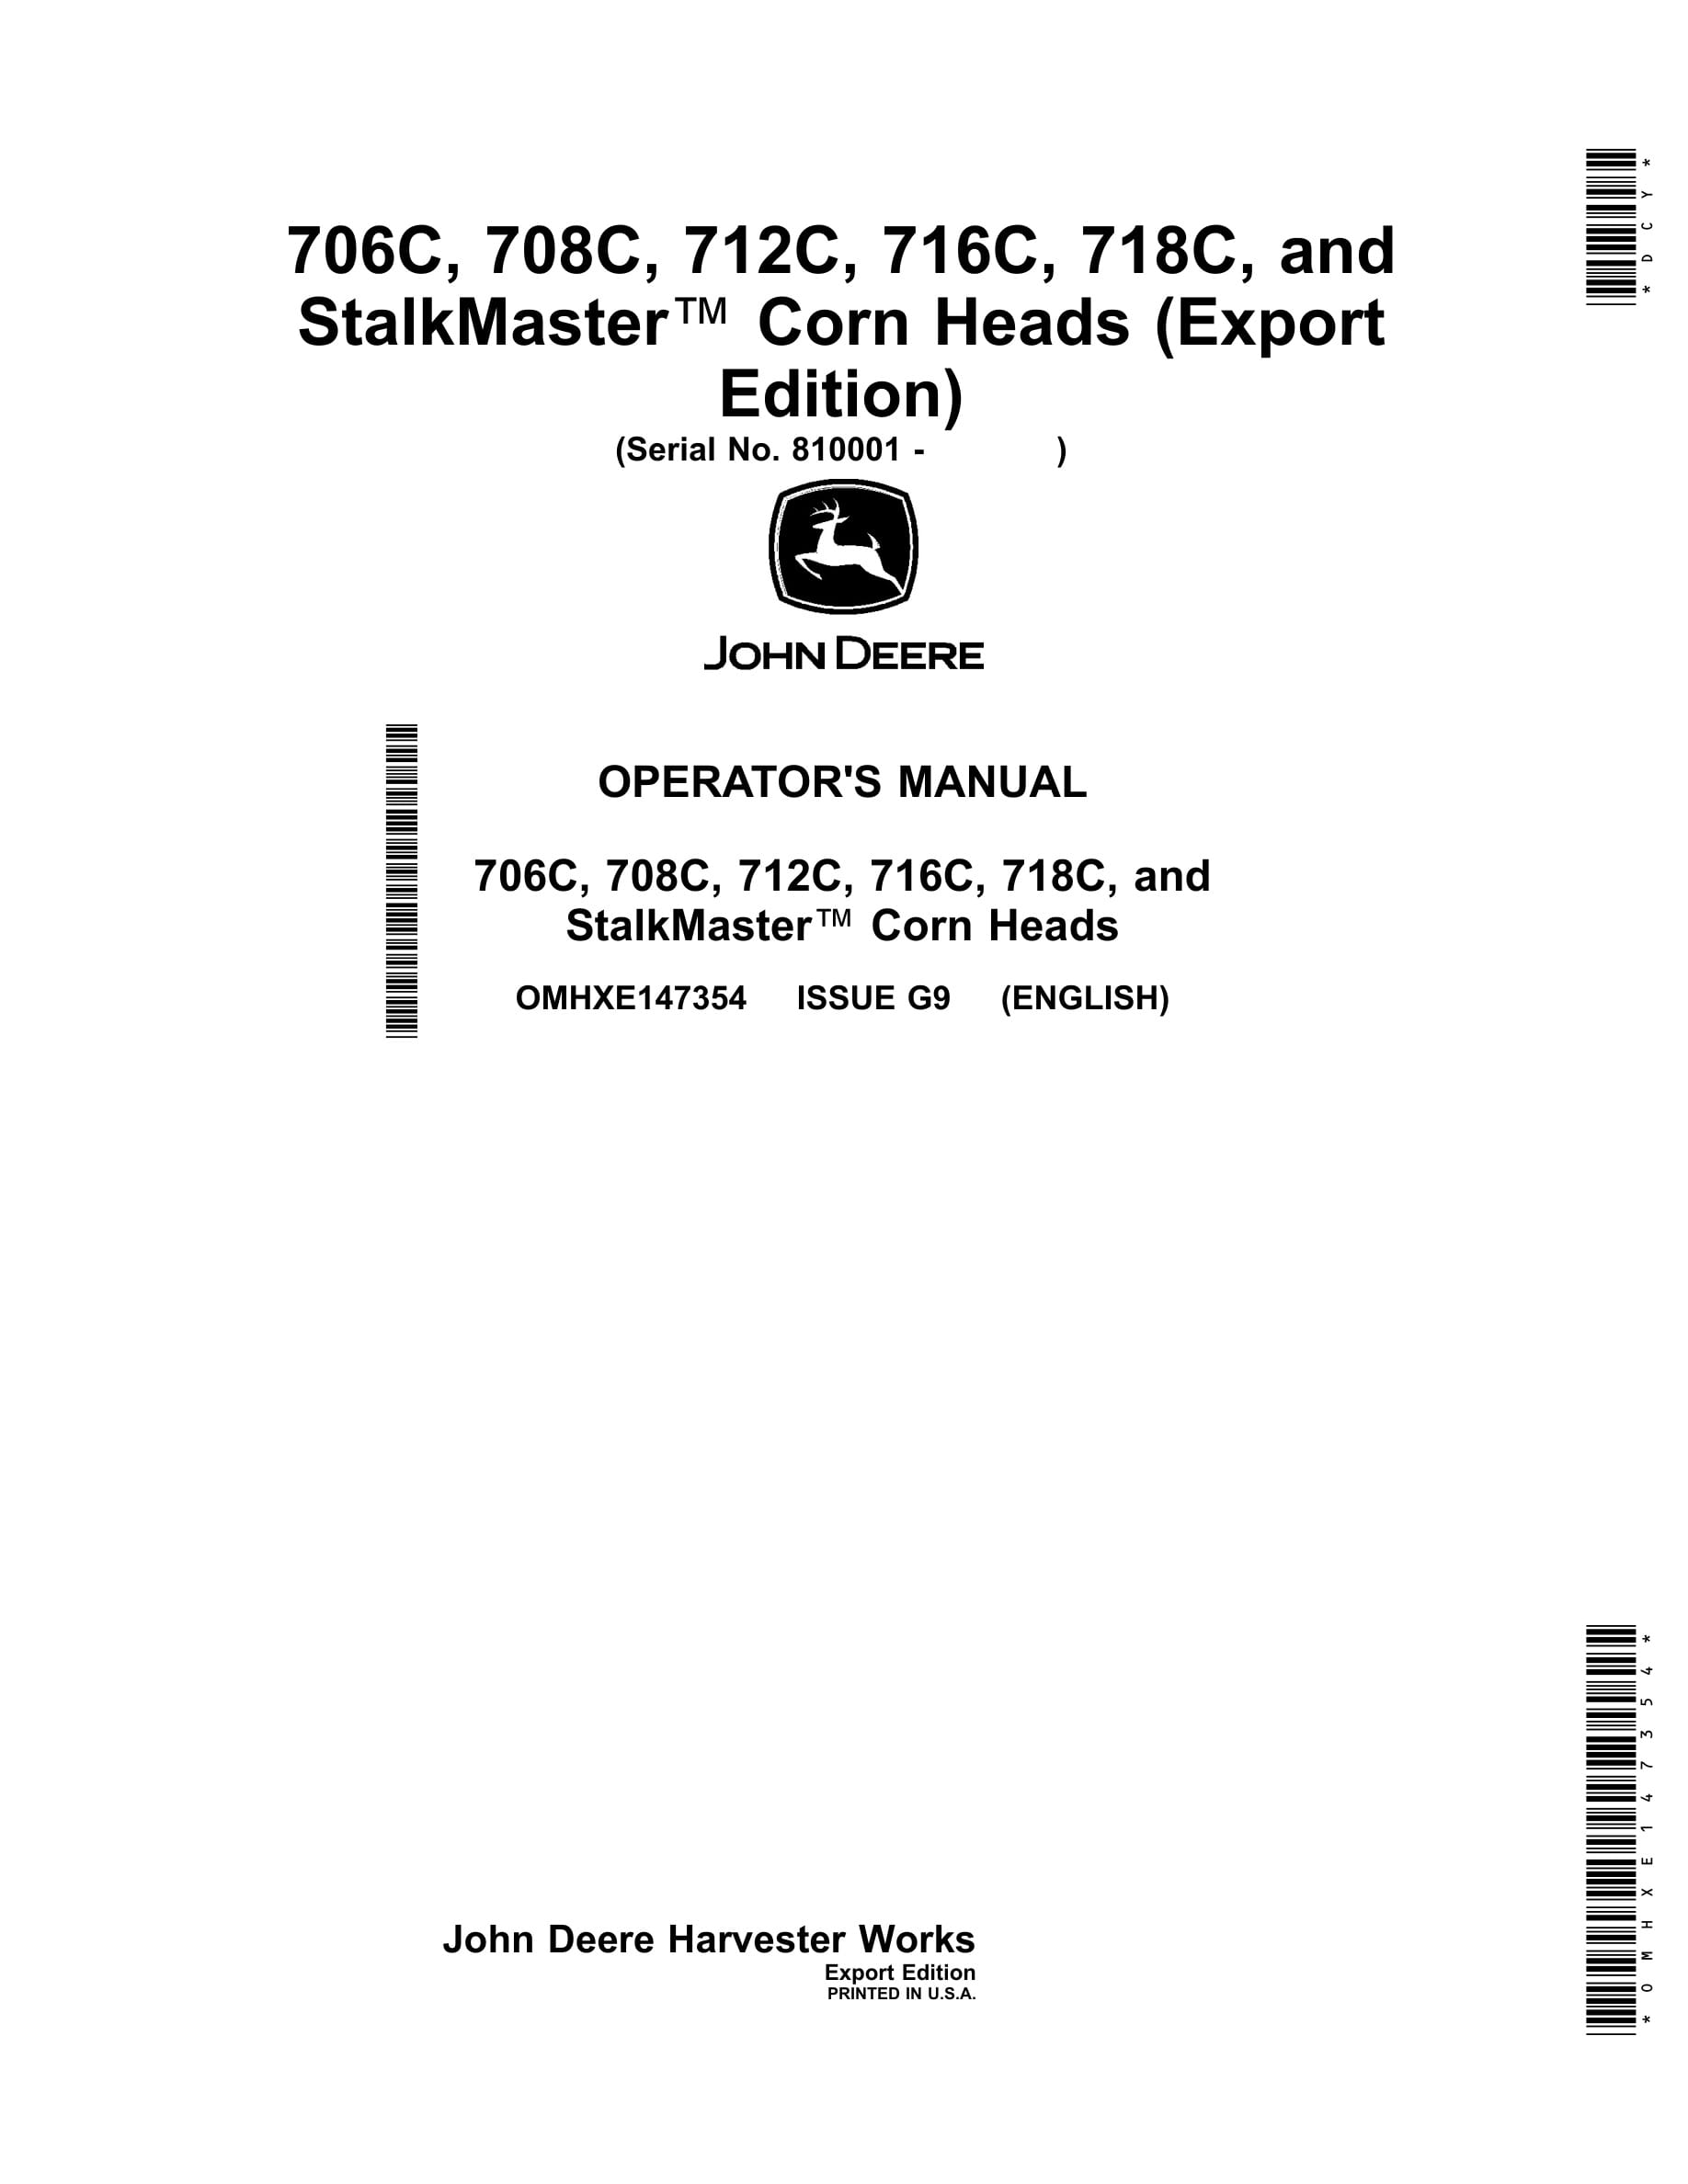 John Deere 706C, 708C, 712C, 716C, 718C, and StalkMaster Corn Heads Operator Manual OMHXE147354-1